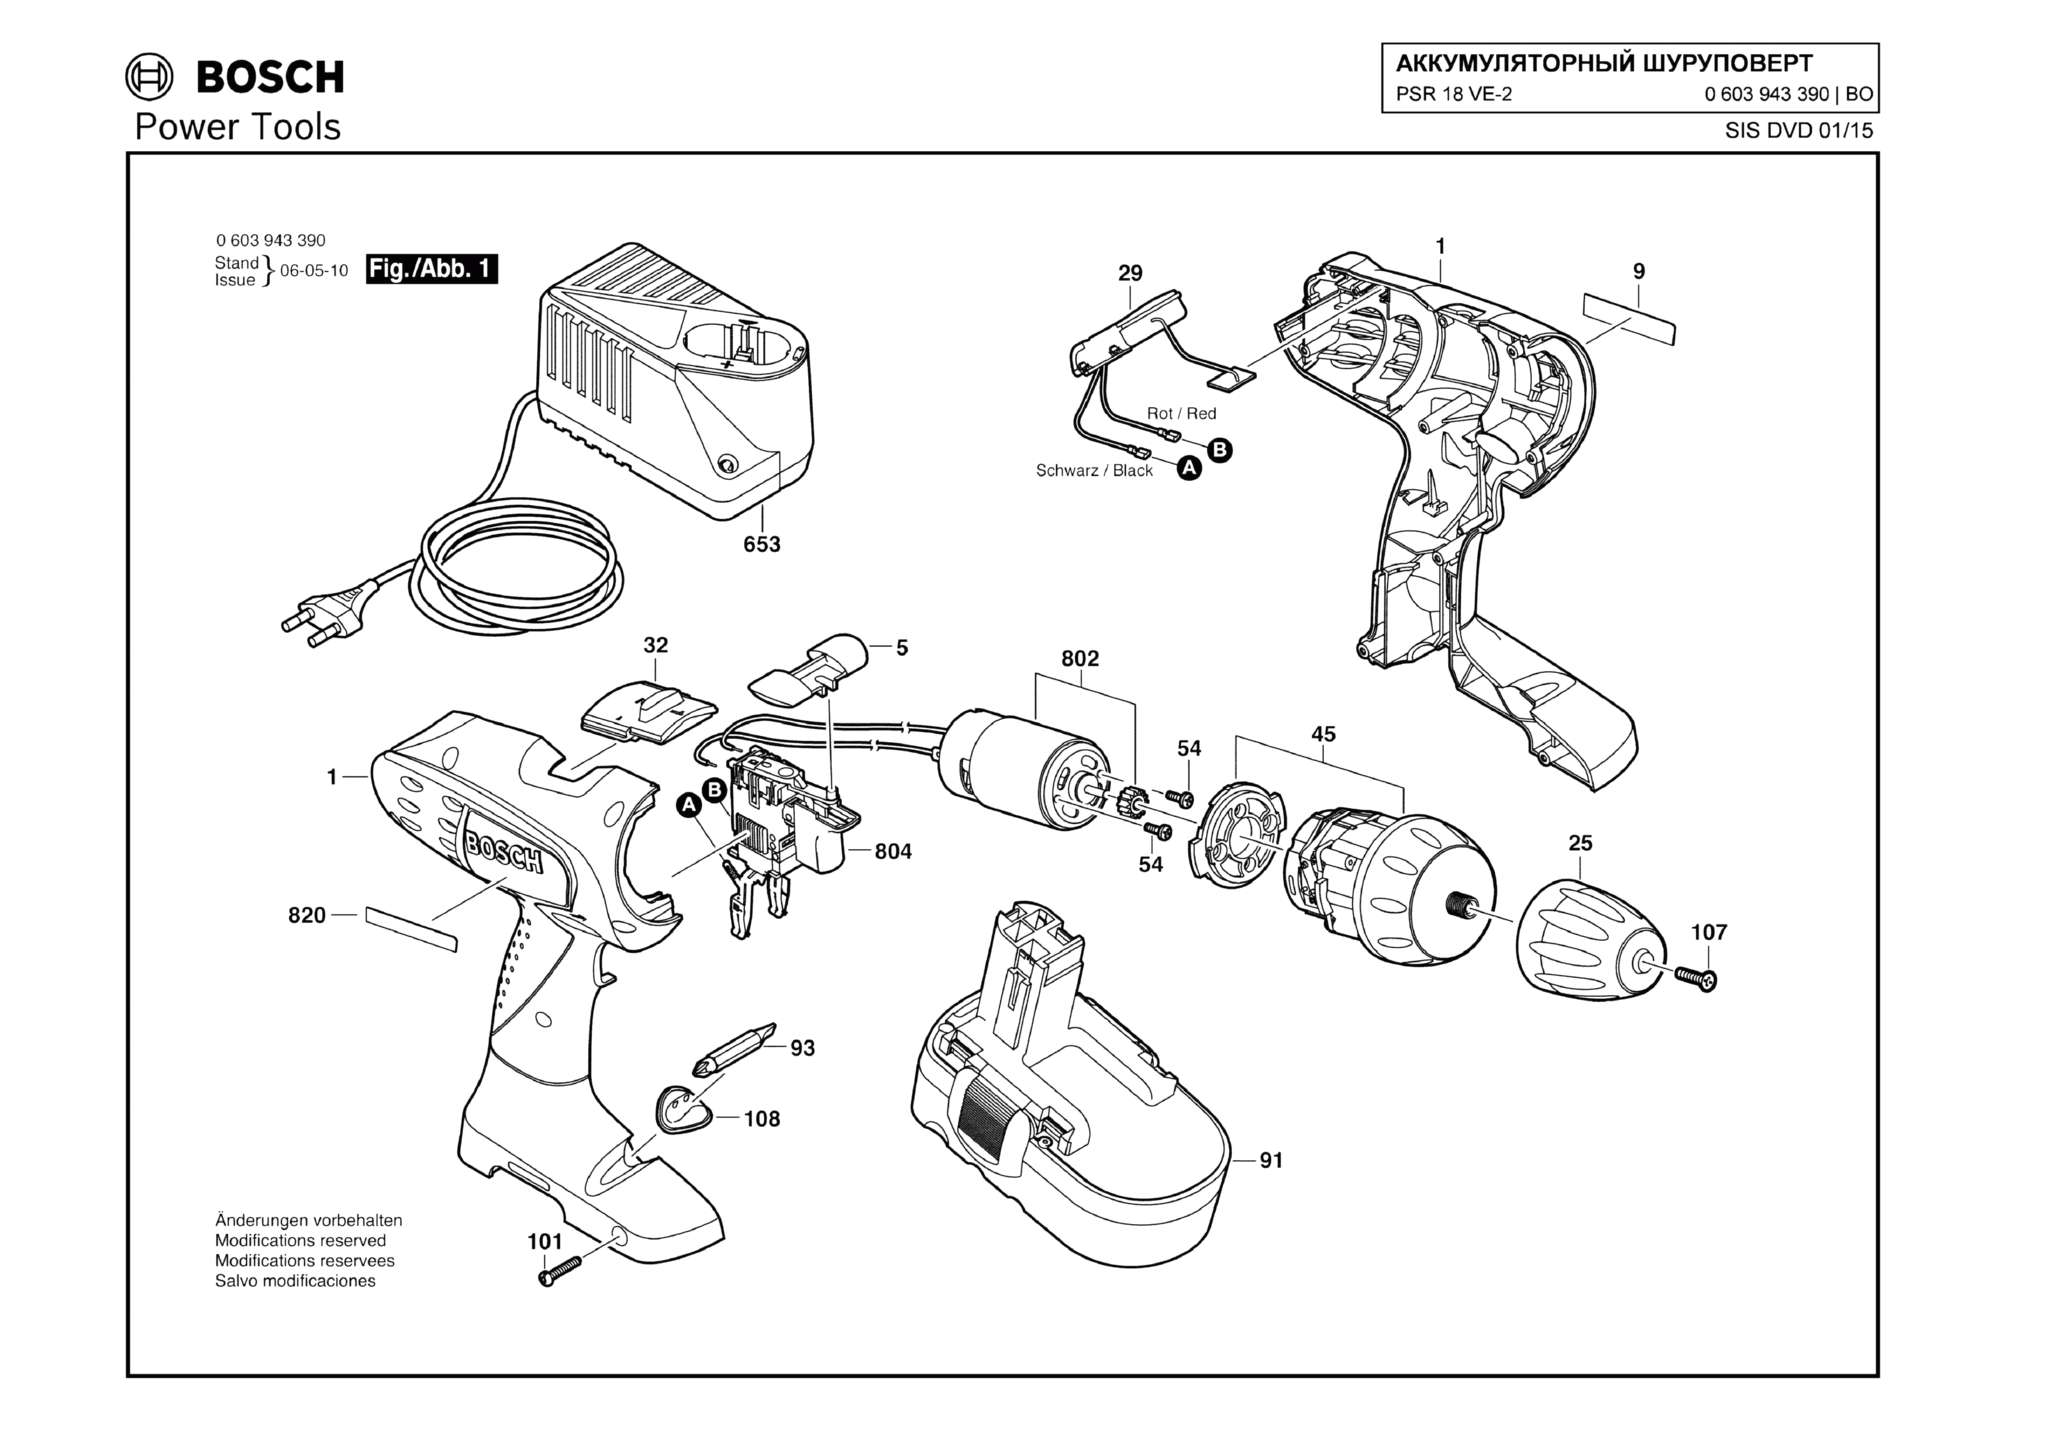 Запчасти, схема и деталировка Bosch PSR 18 VE-2 (ТИП 0603943390)